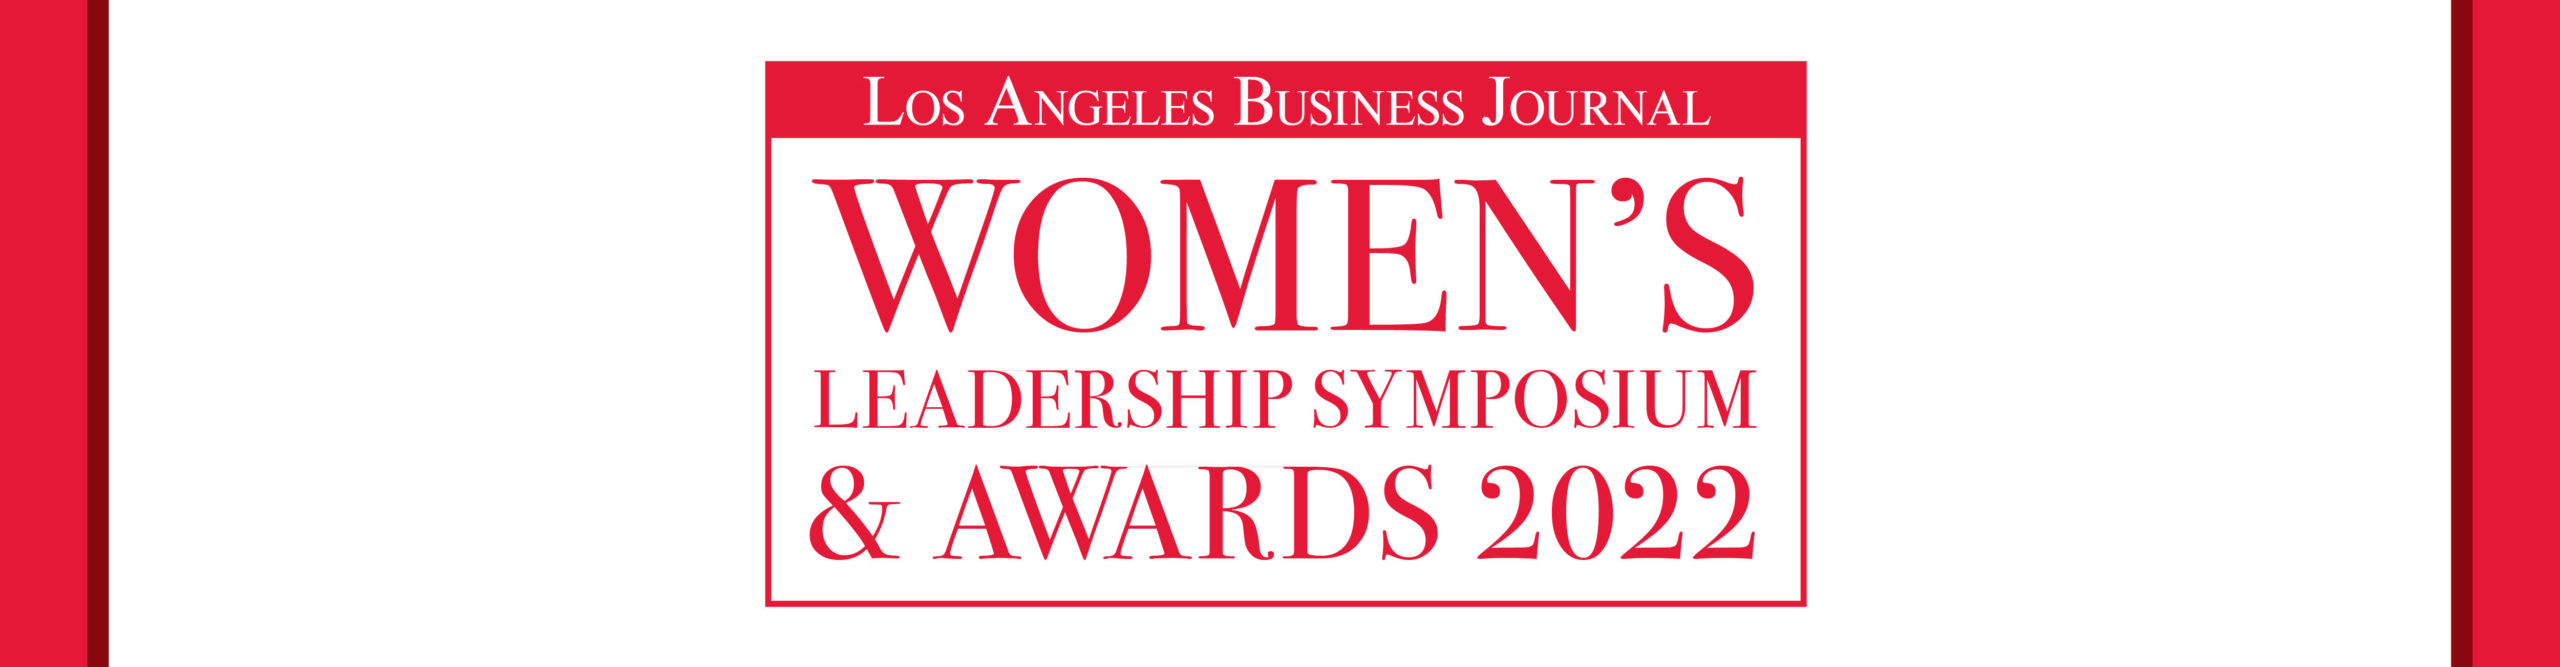 Women’s Leadership Symposium & Awards Event Banner